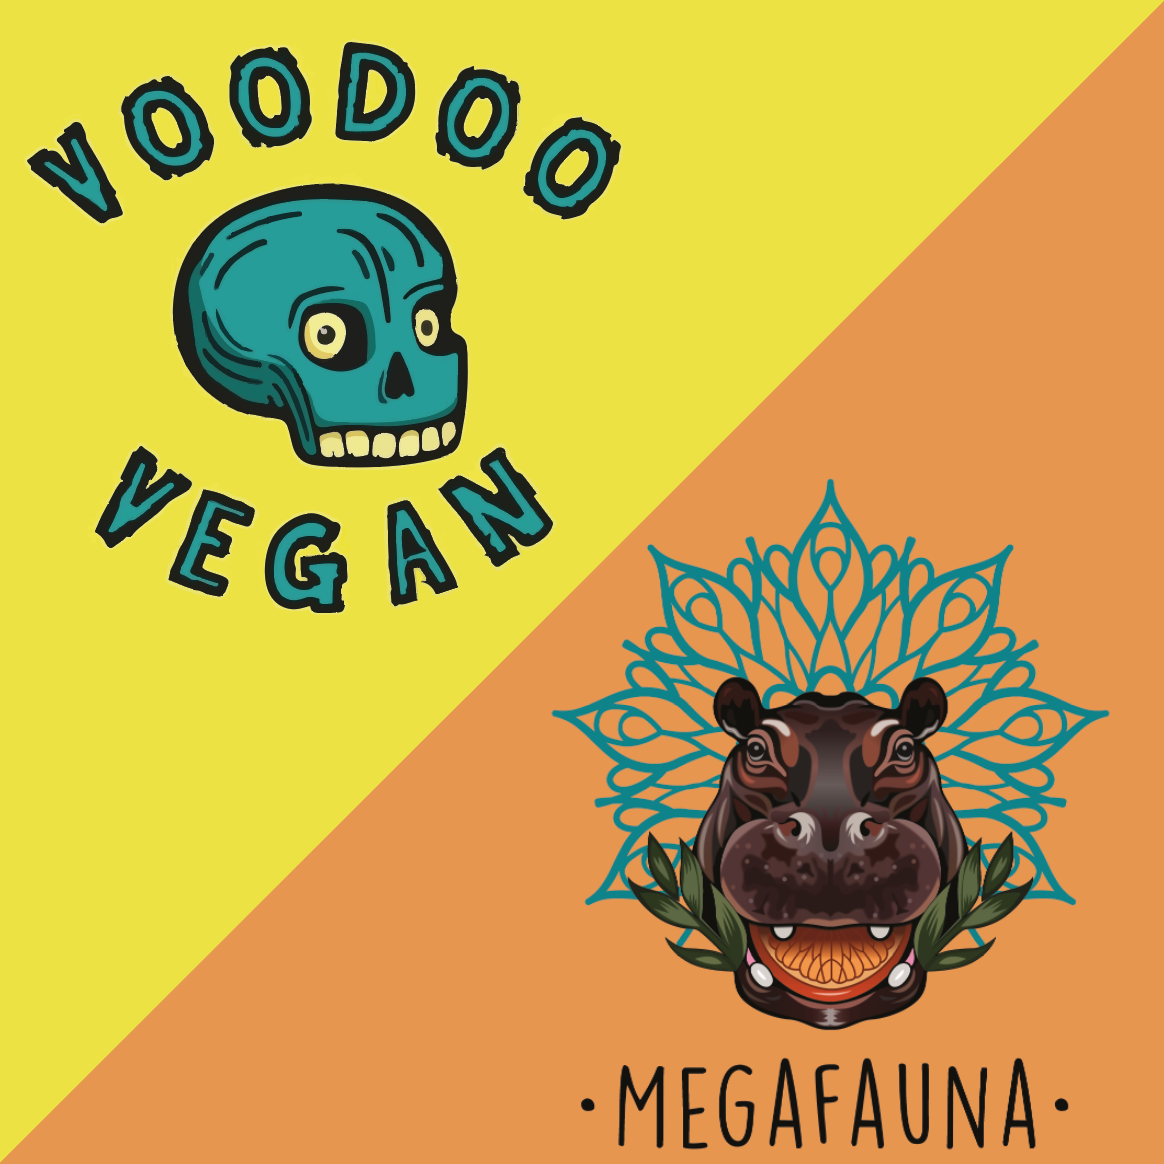 Voodoo Vegan Megafauna Logos